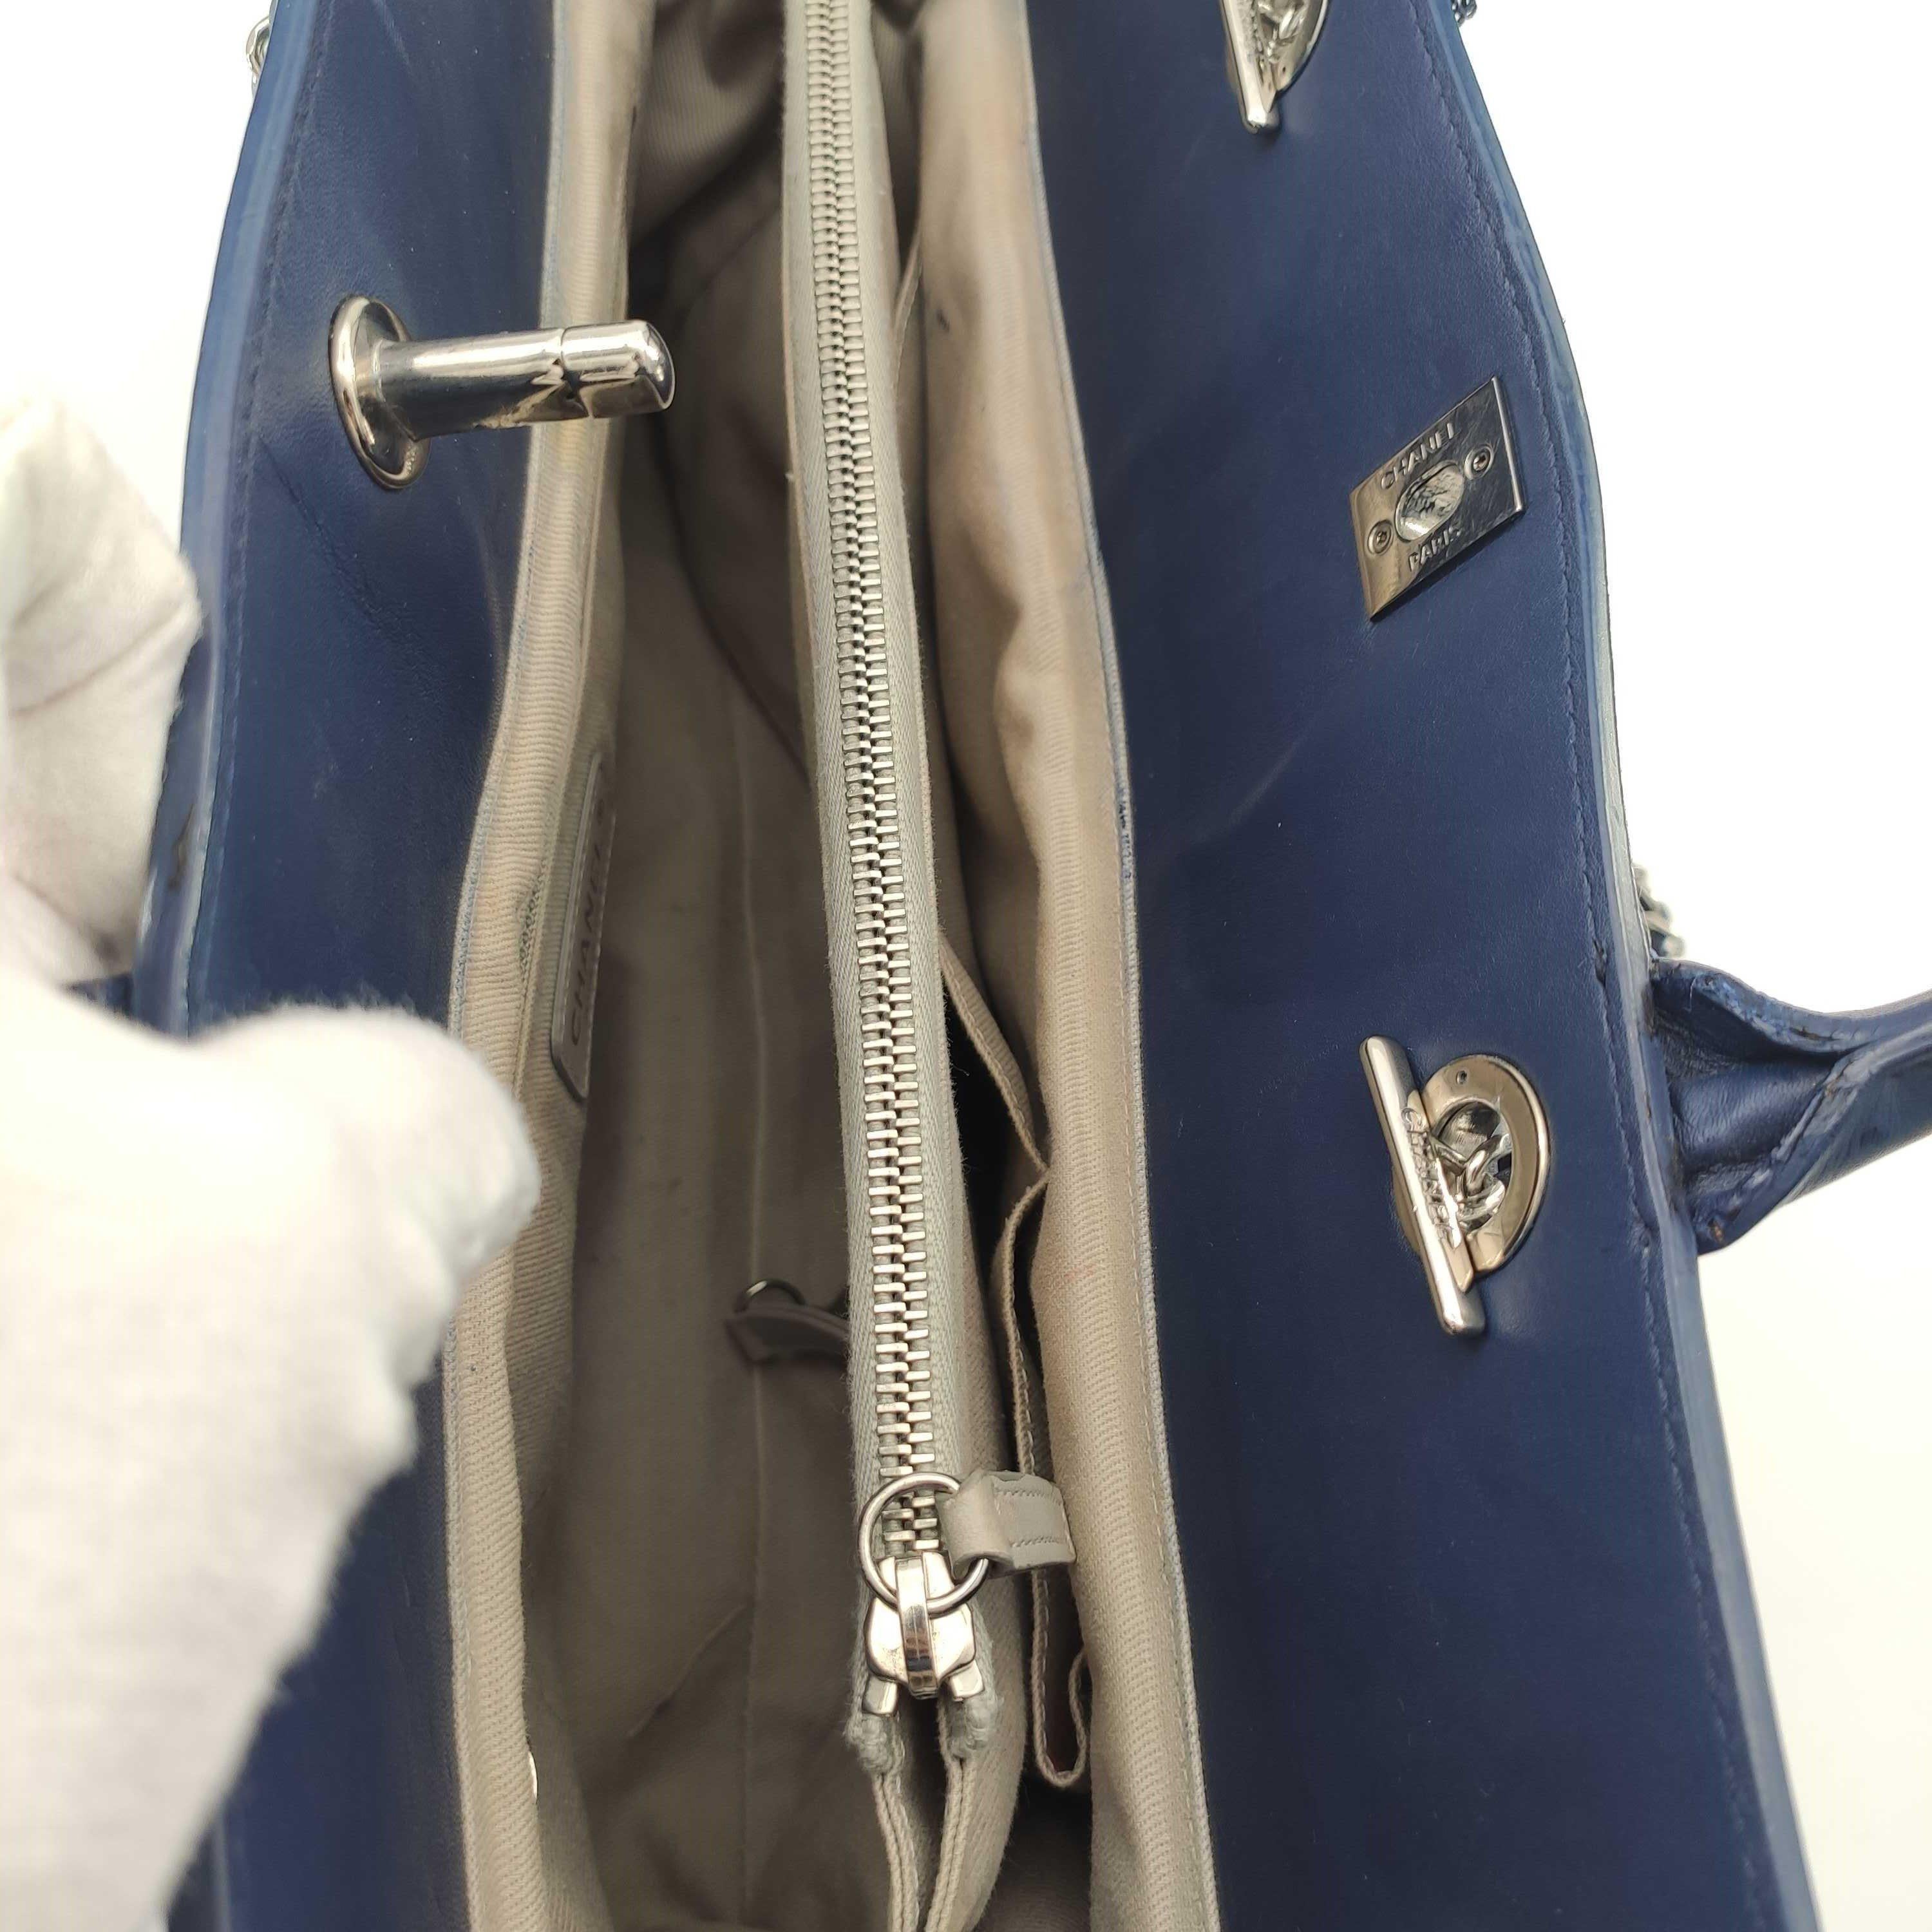 Women's CHANEL Portobello Shoulder bag in Blue Leather